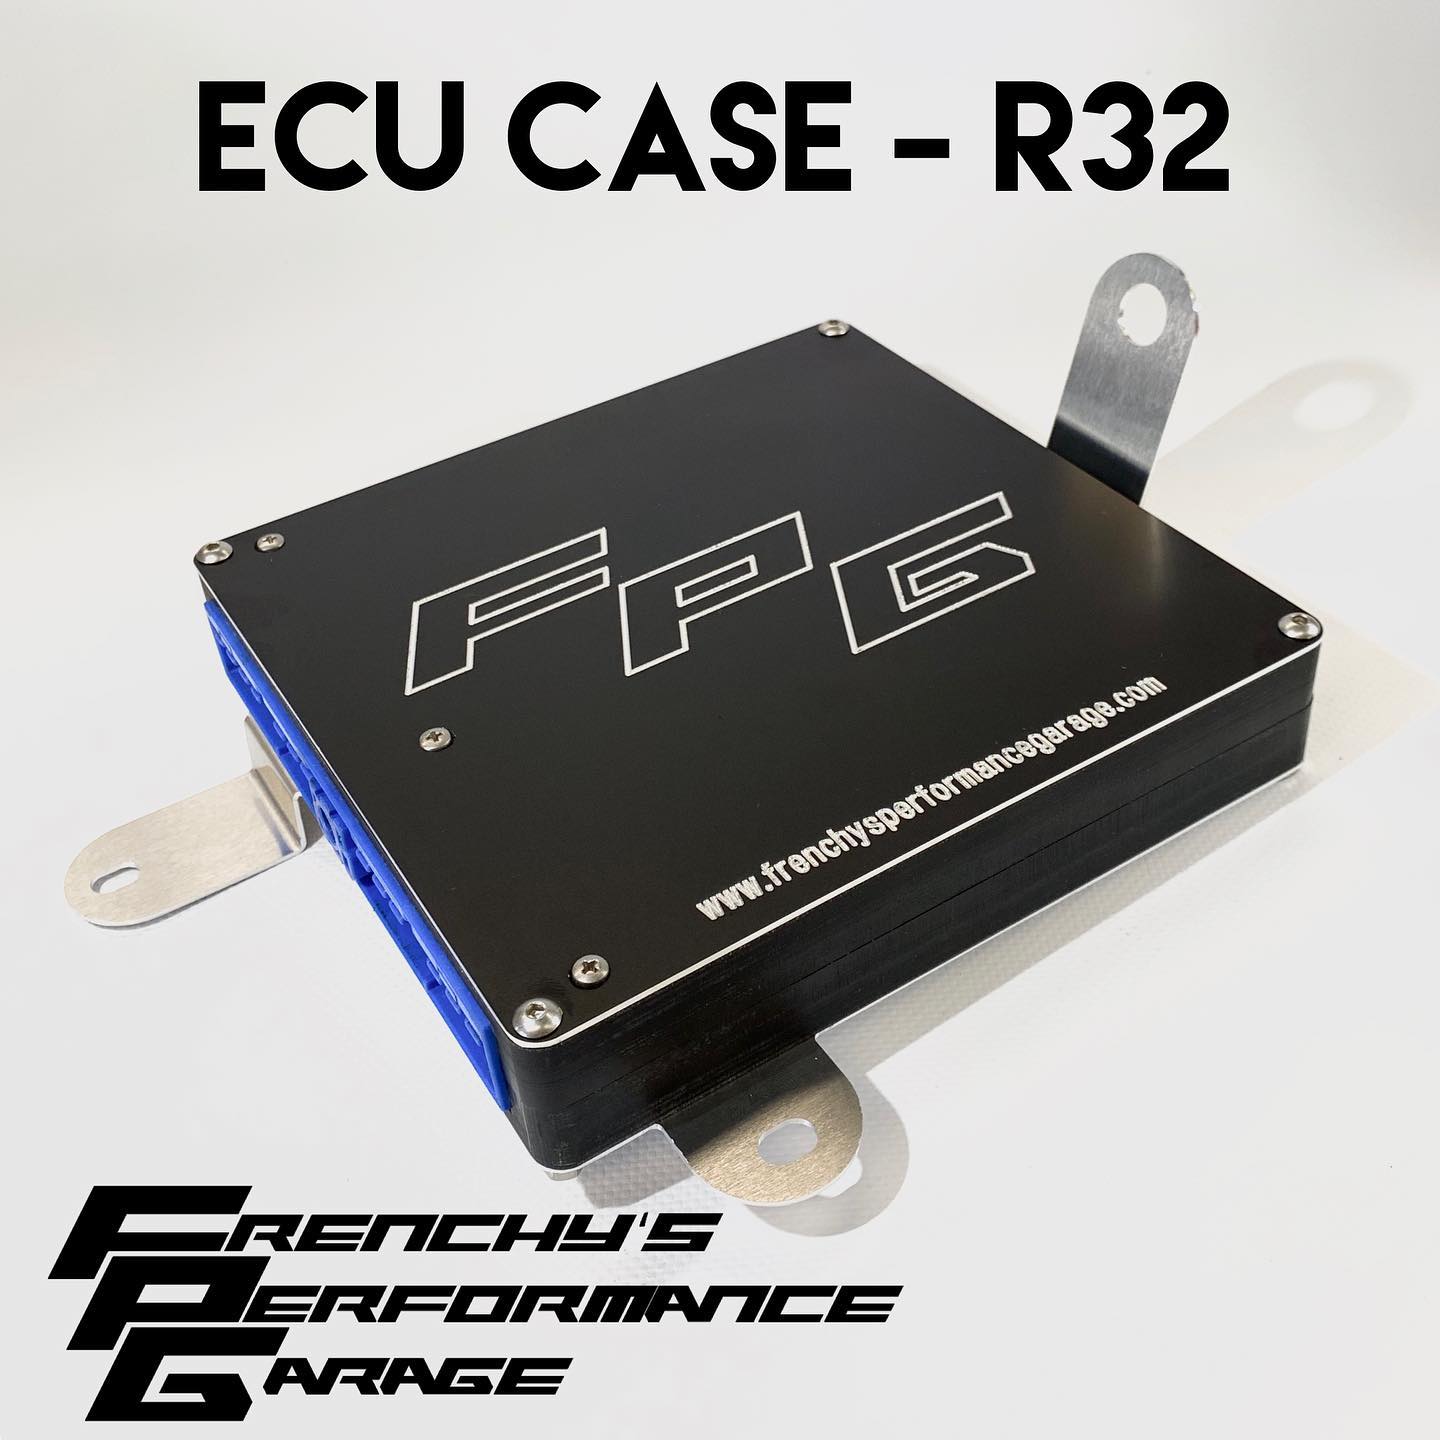 FPG Link PlugIn ECU Mounting Kit to suit Nissan Skyline R32 GT-R